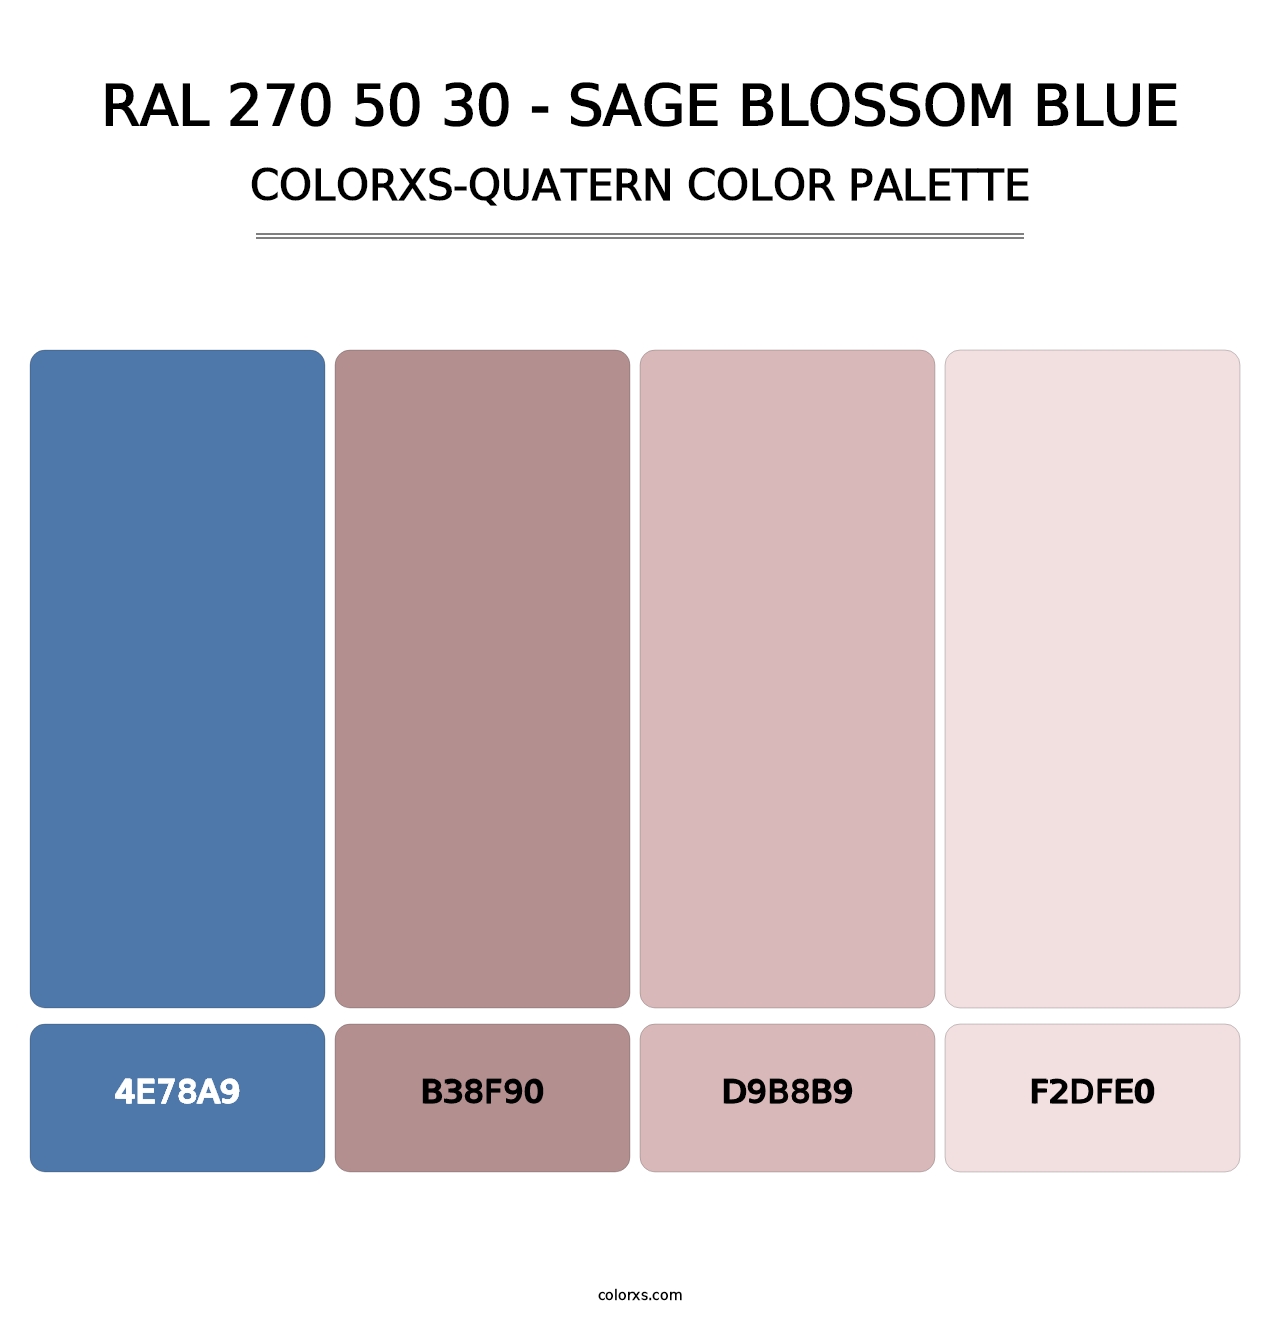 RAL 270 50 30 - Sage Blossom Blue - Colorxs Quatern Palette